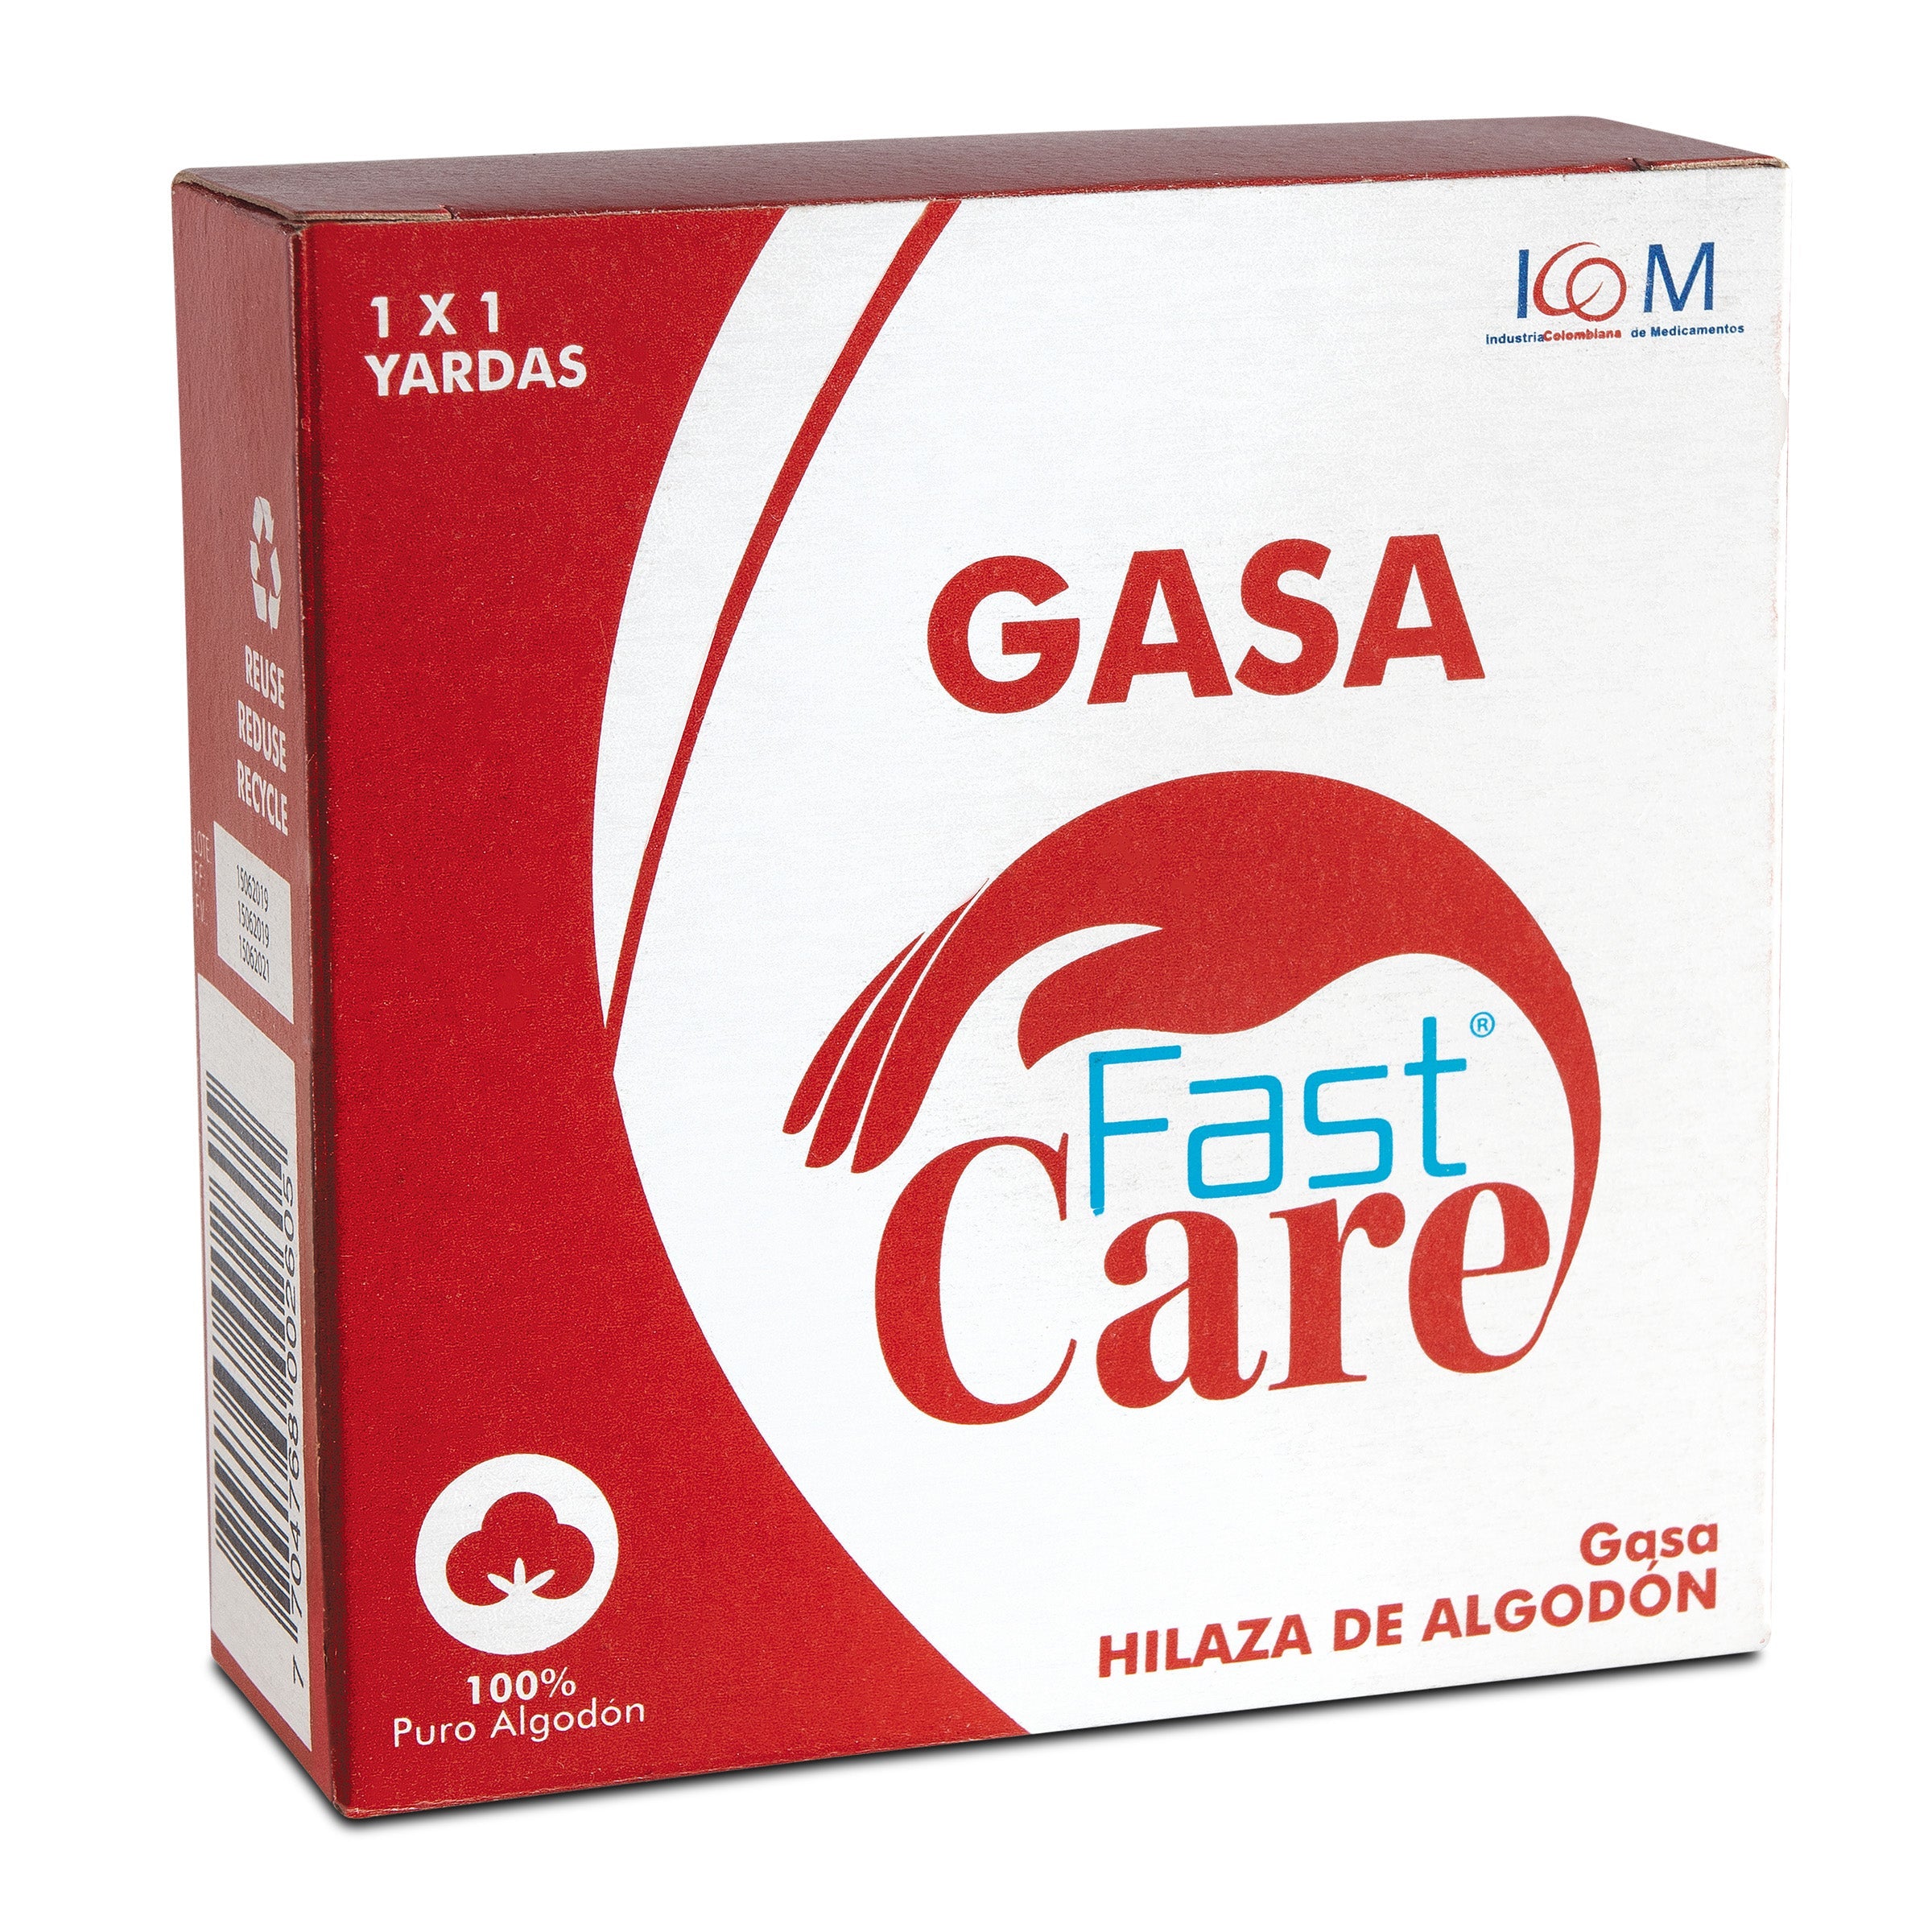 GASA FAST CARE ASEPTICA 1X1 ICOM